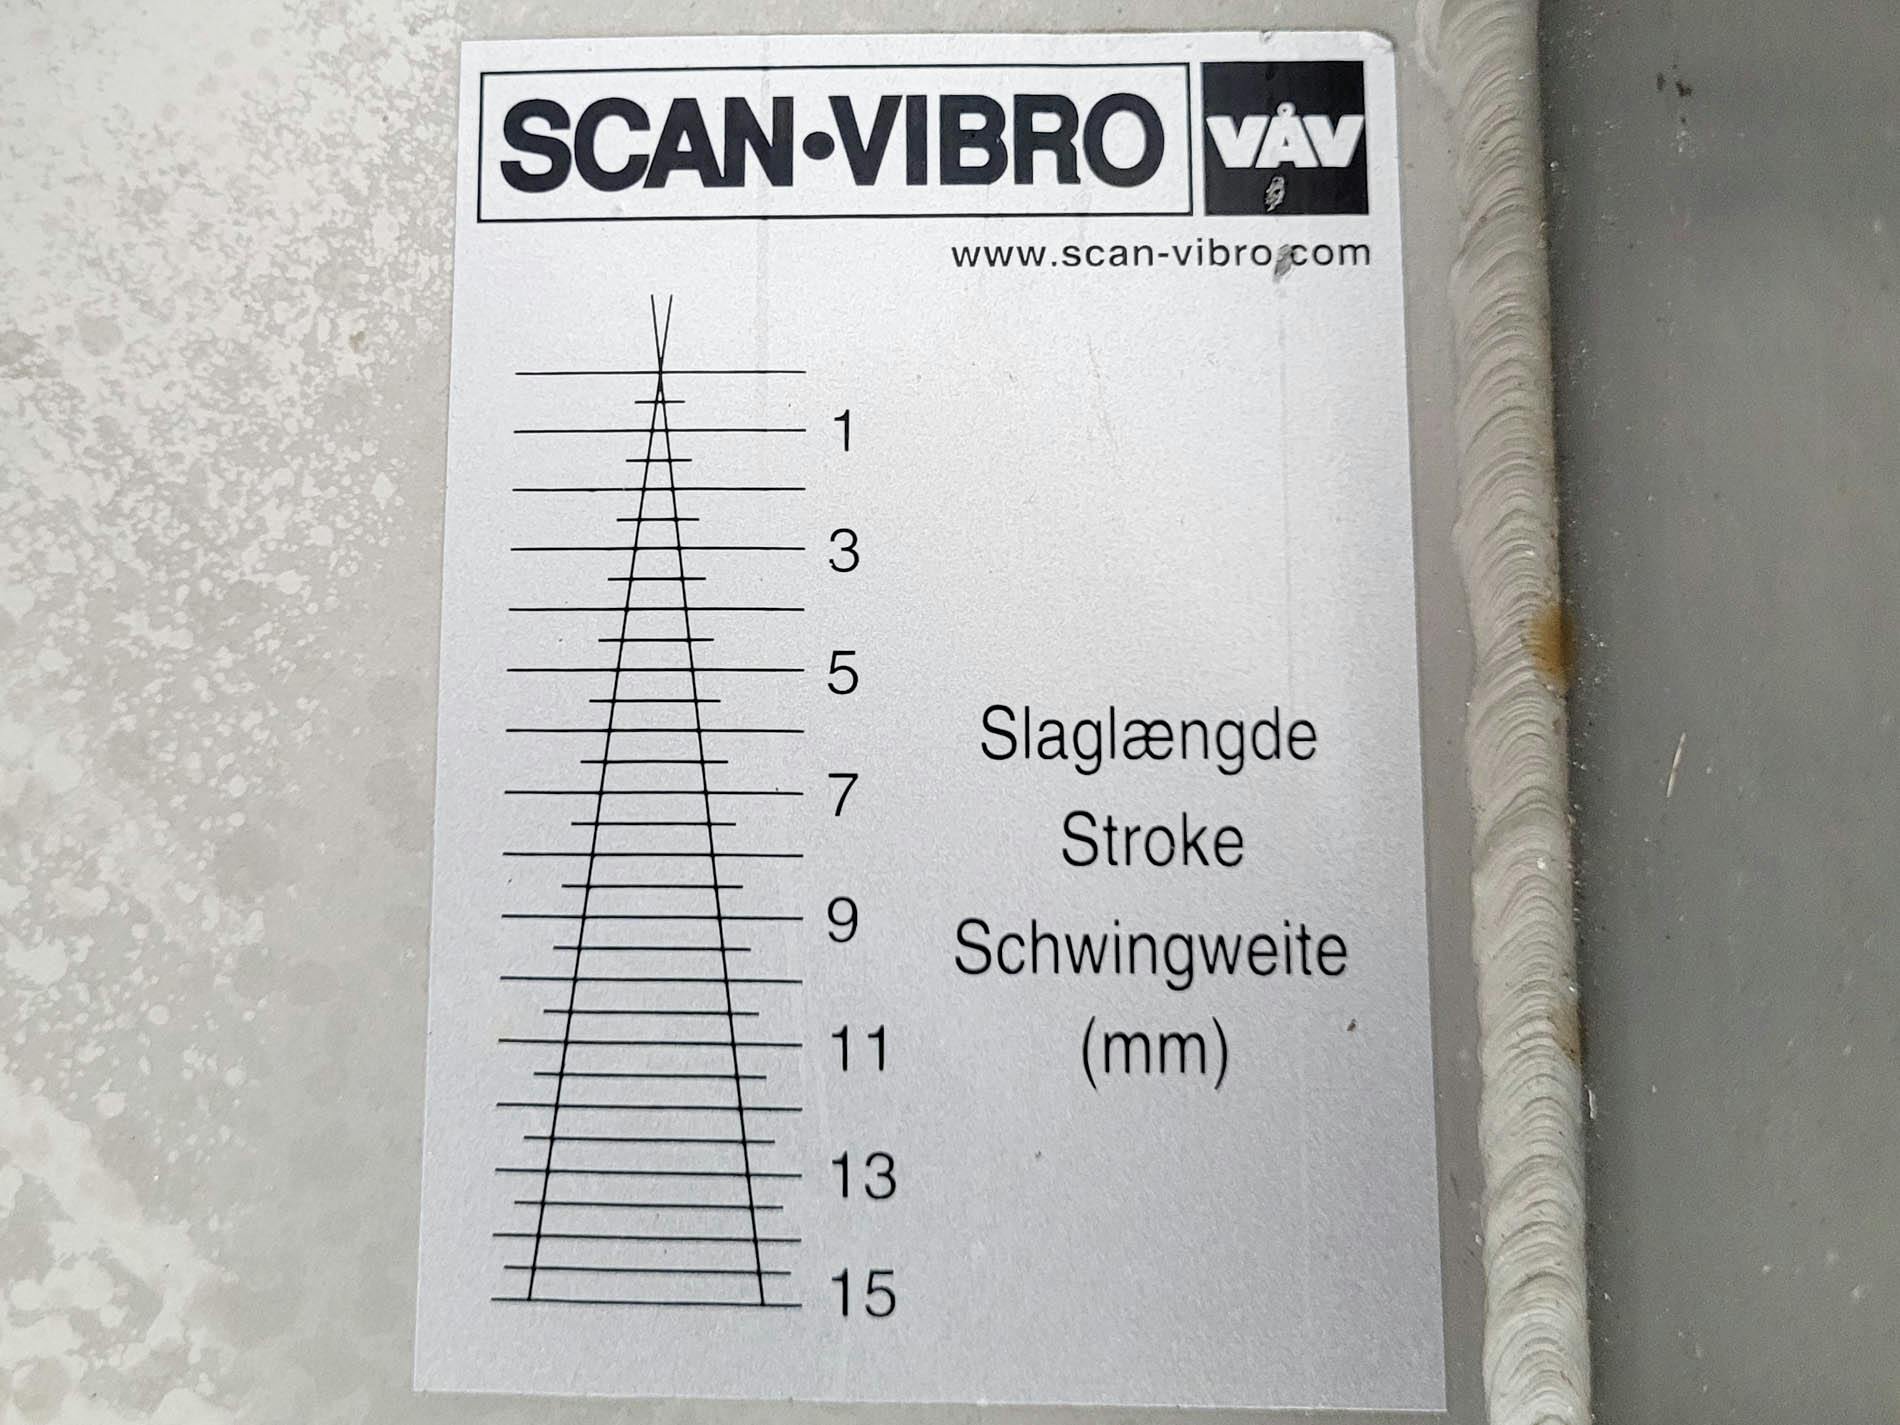 VAV Scan-Vibro TRS 300 x 1019 - Podajnik wibracyjny - image 8